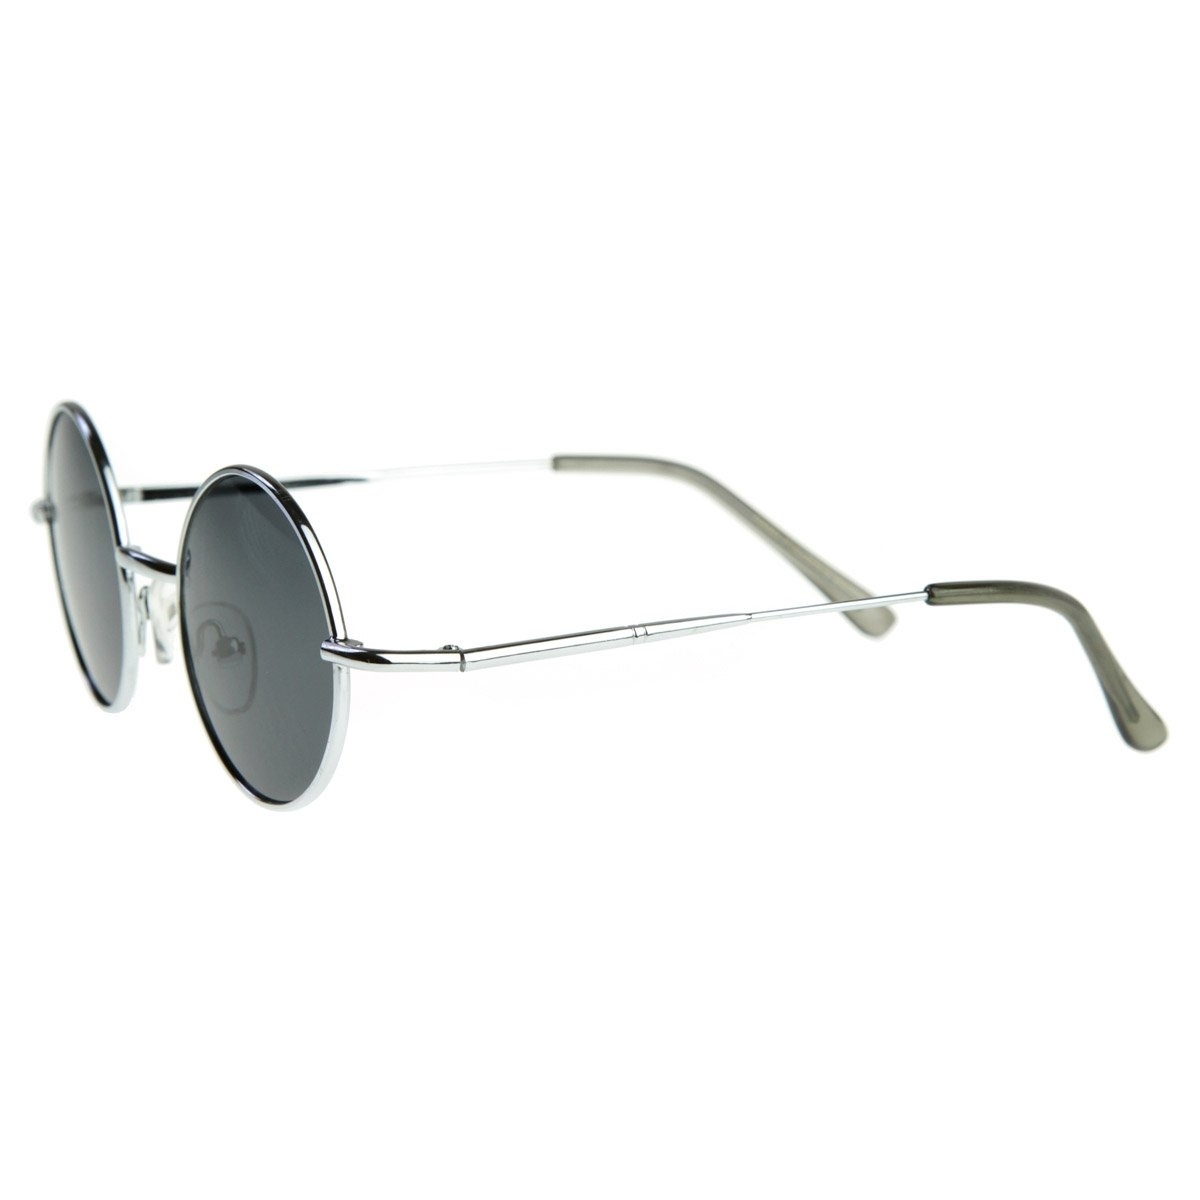 Small Retro-Vintage Style Lennon Inspired Round Metal Circle Sunglasses - Silver Sun